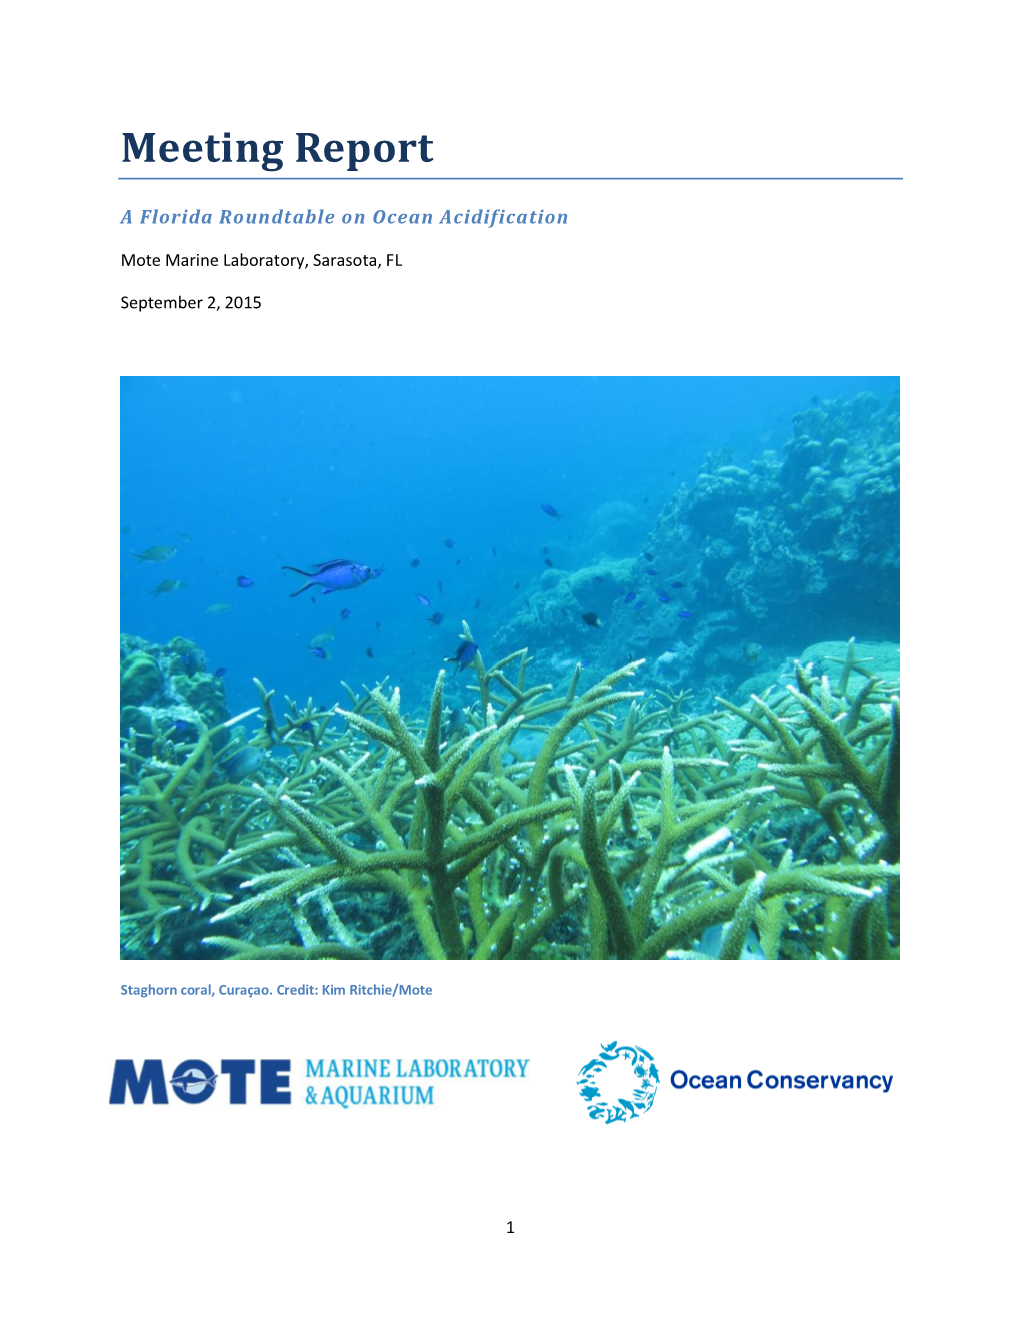 Meeting Report. Mote Marine Laboratory, Sarasota, FL